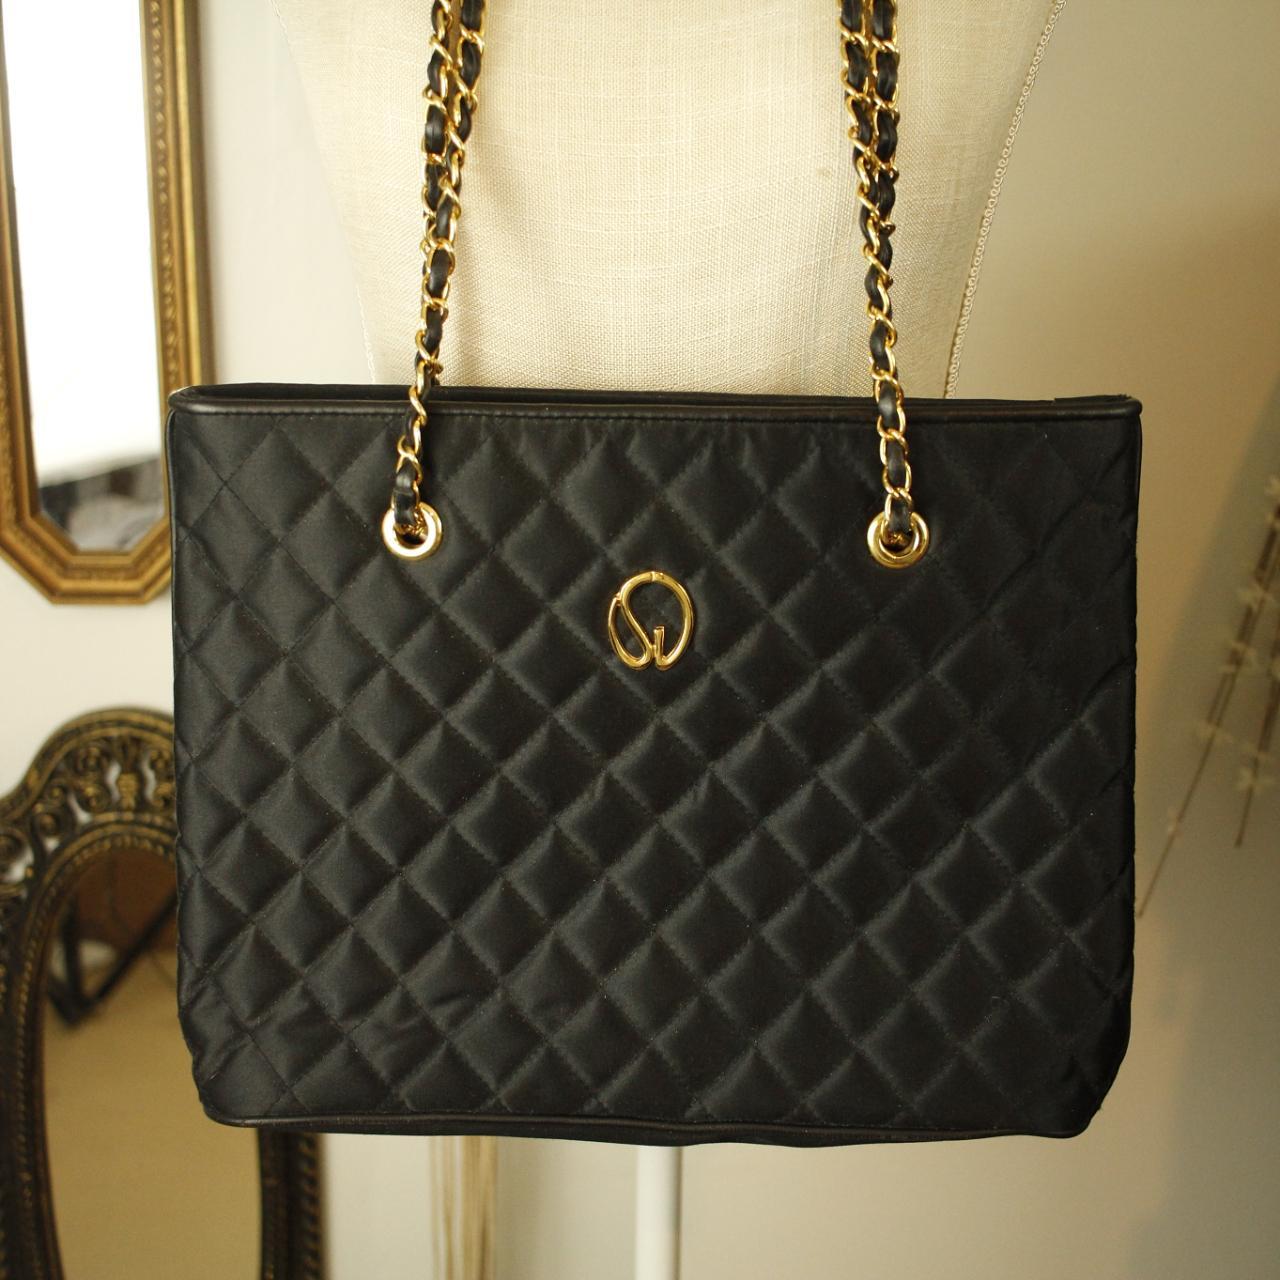 Chanel Coco Boston Bag Classic and stunning rare - Depop